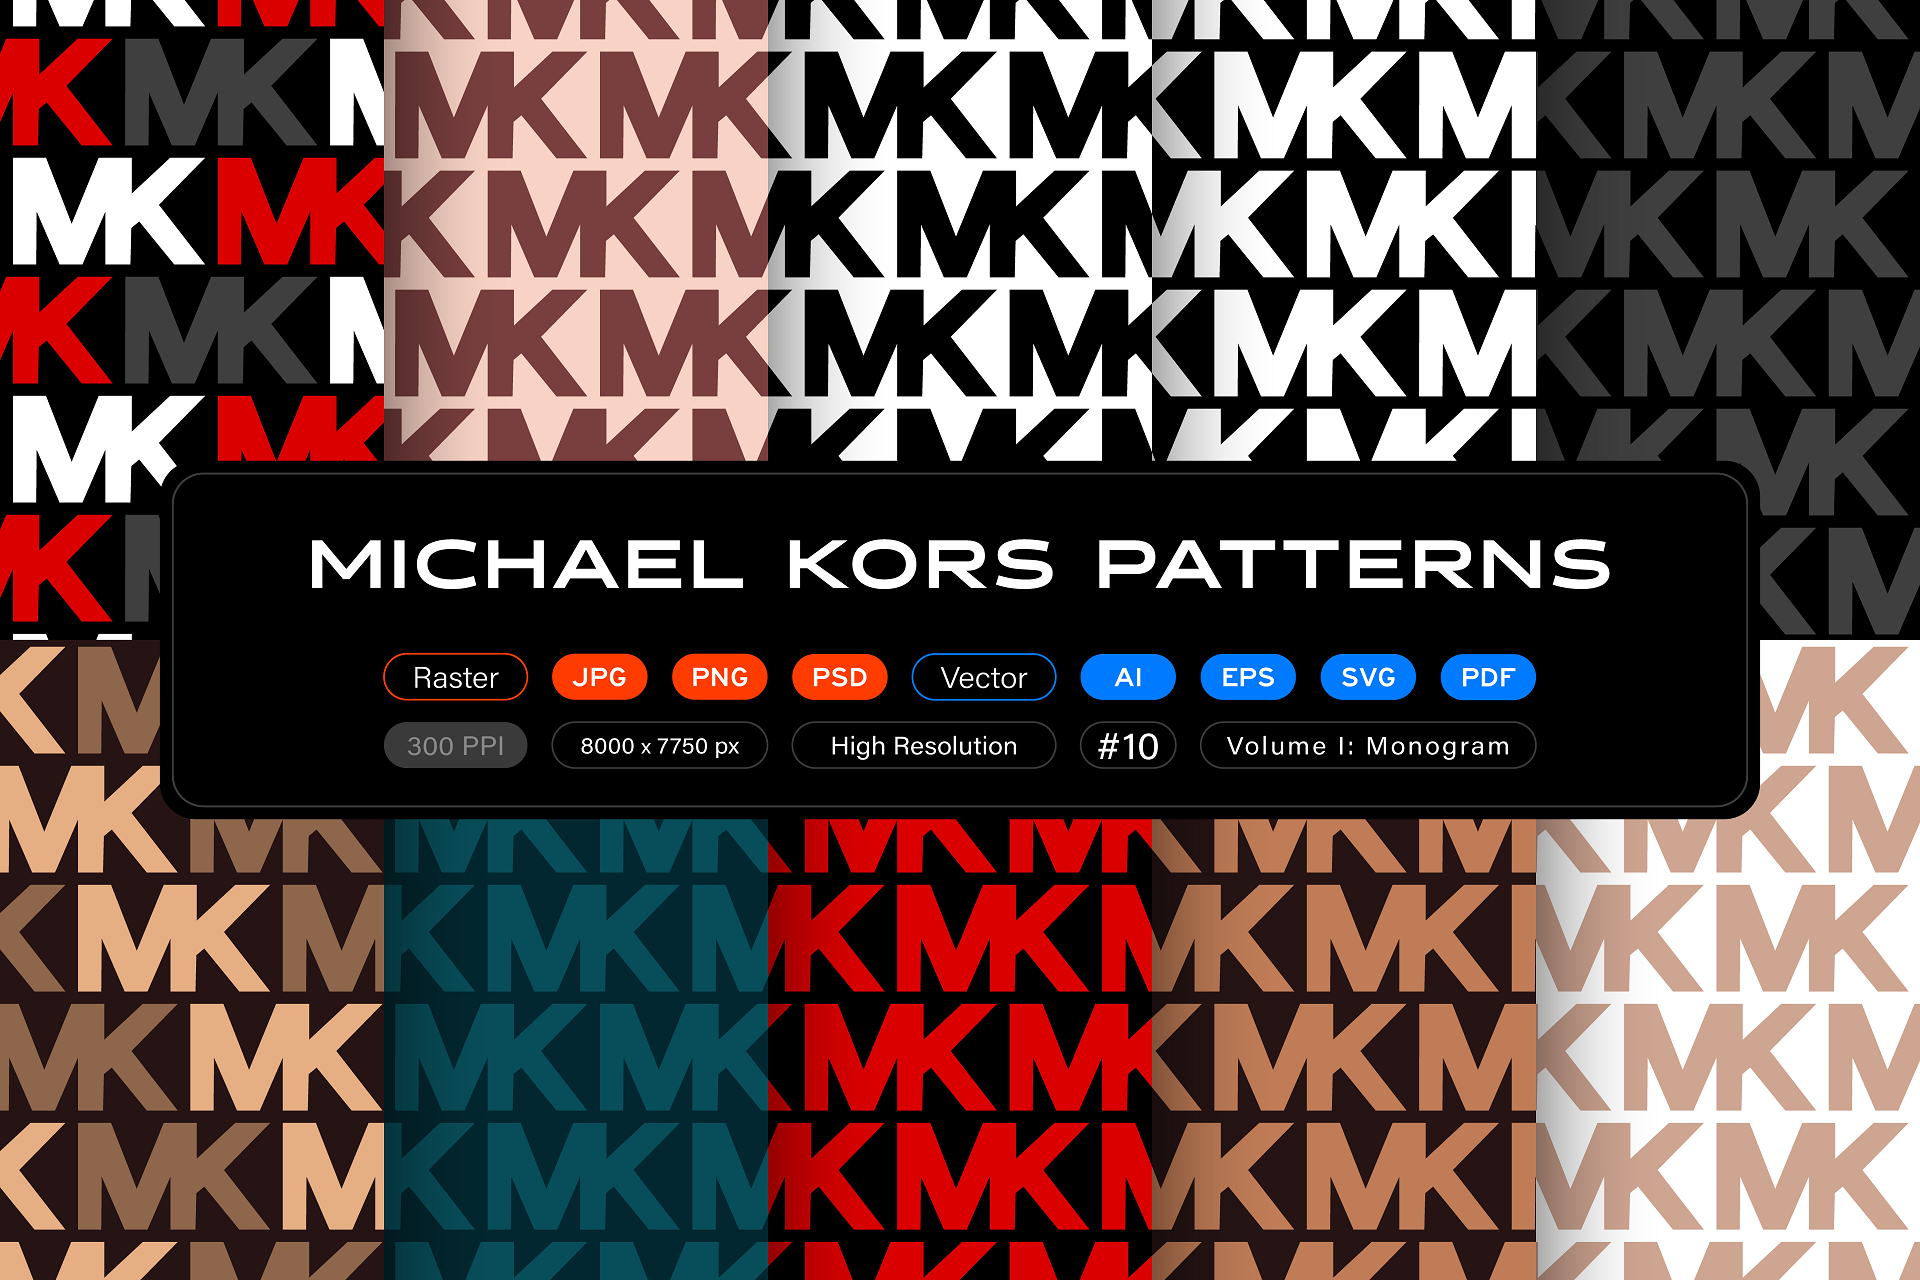 Michael Kors Patterns, Vol. 1: Monogram by itsfarahbakhsh on DeviantArt